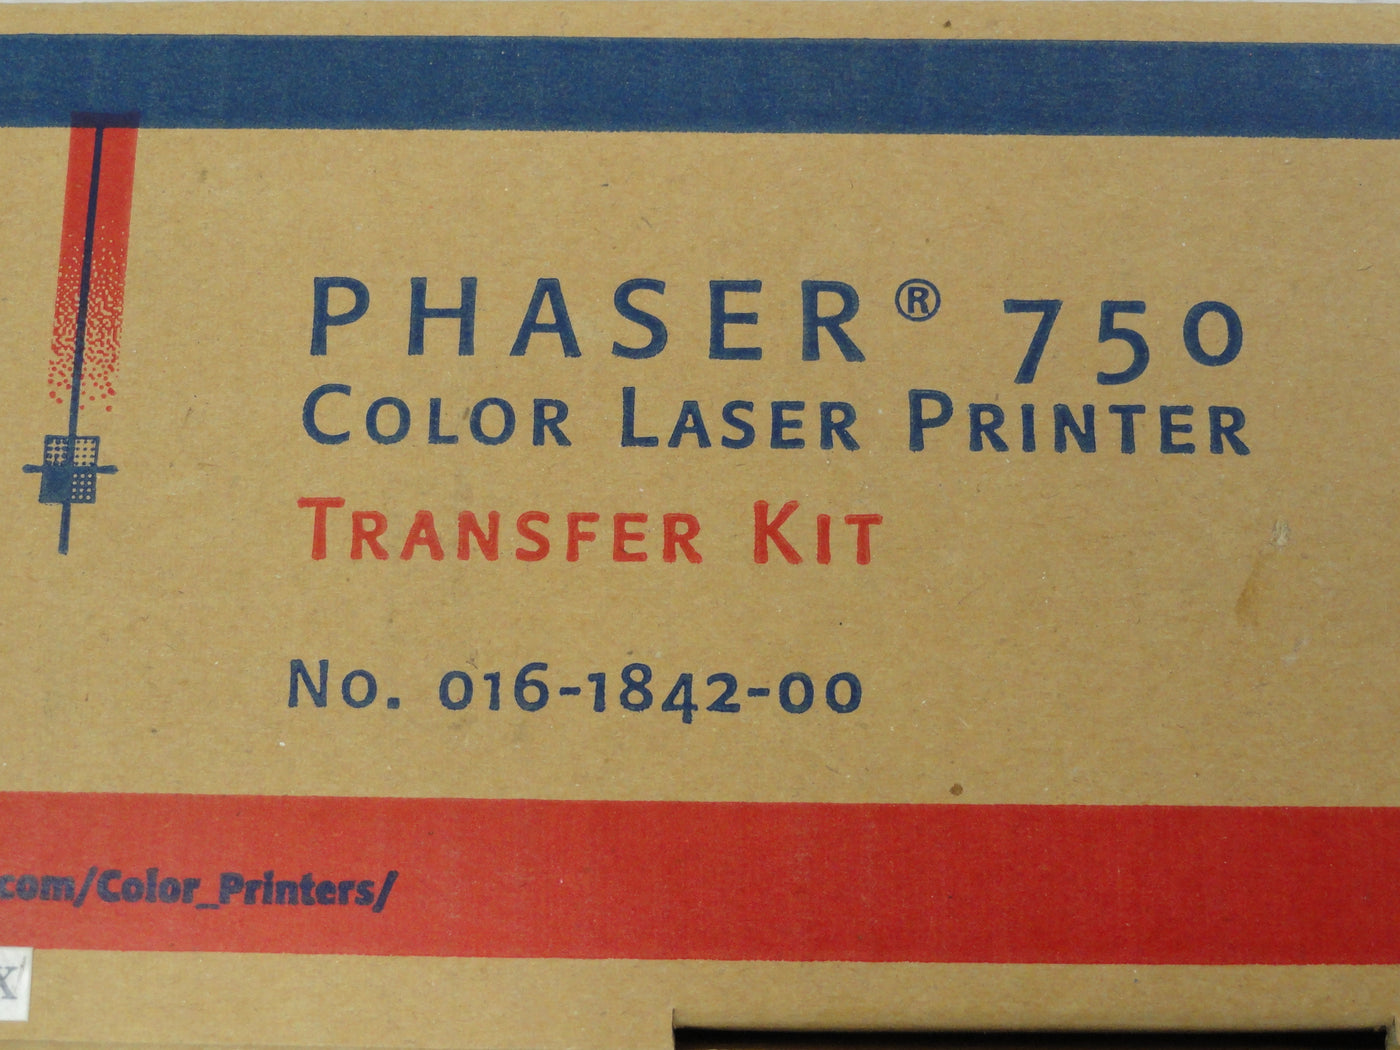 PR10528_016-1842-00_Tektronix Color Laser Printing Transfer Kit 750 - Image2